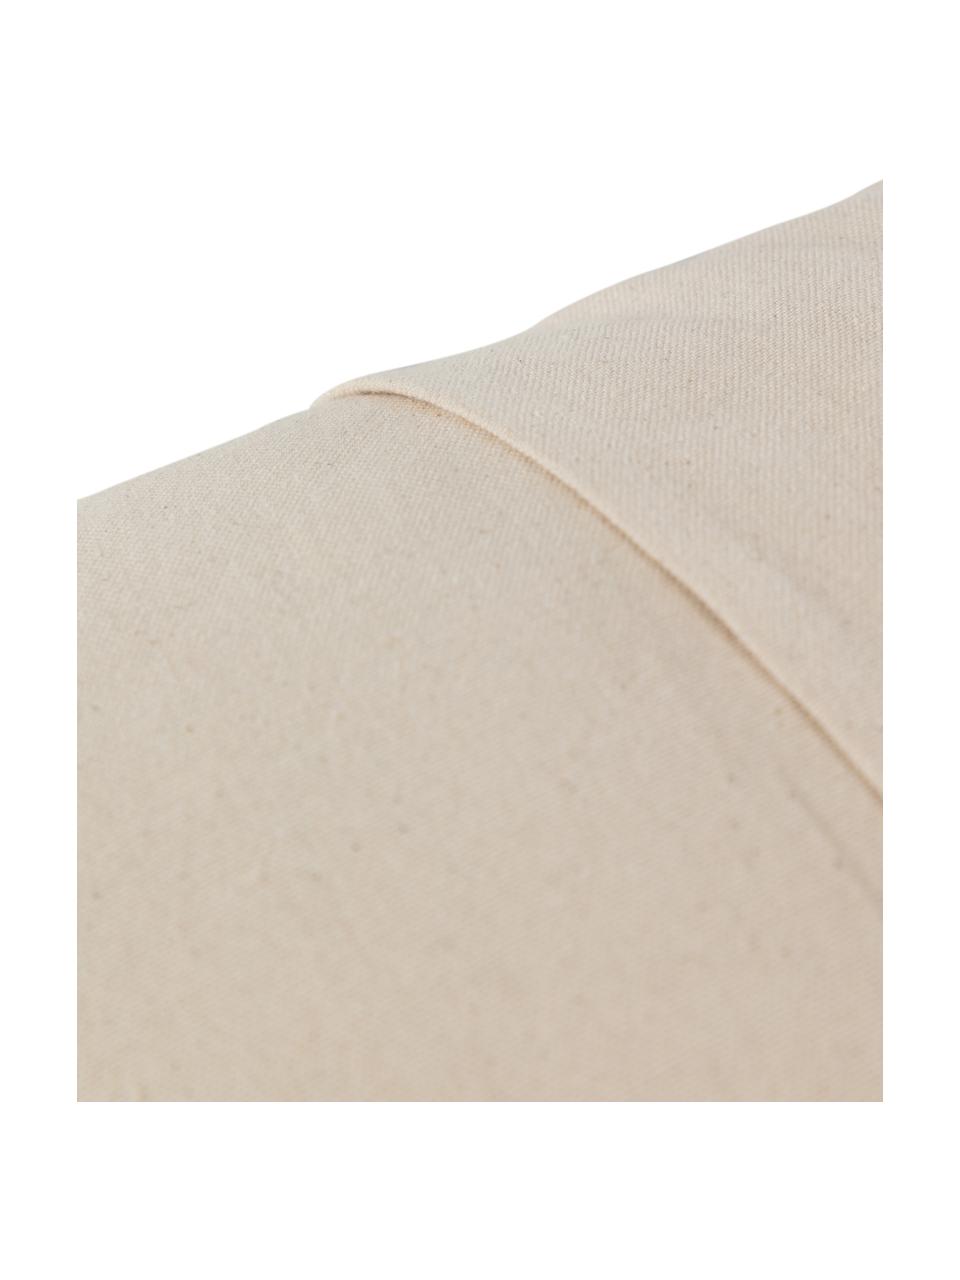 Federa arredo in cotone con cuciture Anahi, 100% cotone, Beige, Larg. 45 x Lung. 45 cm